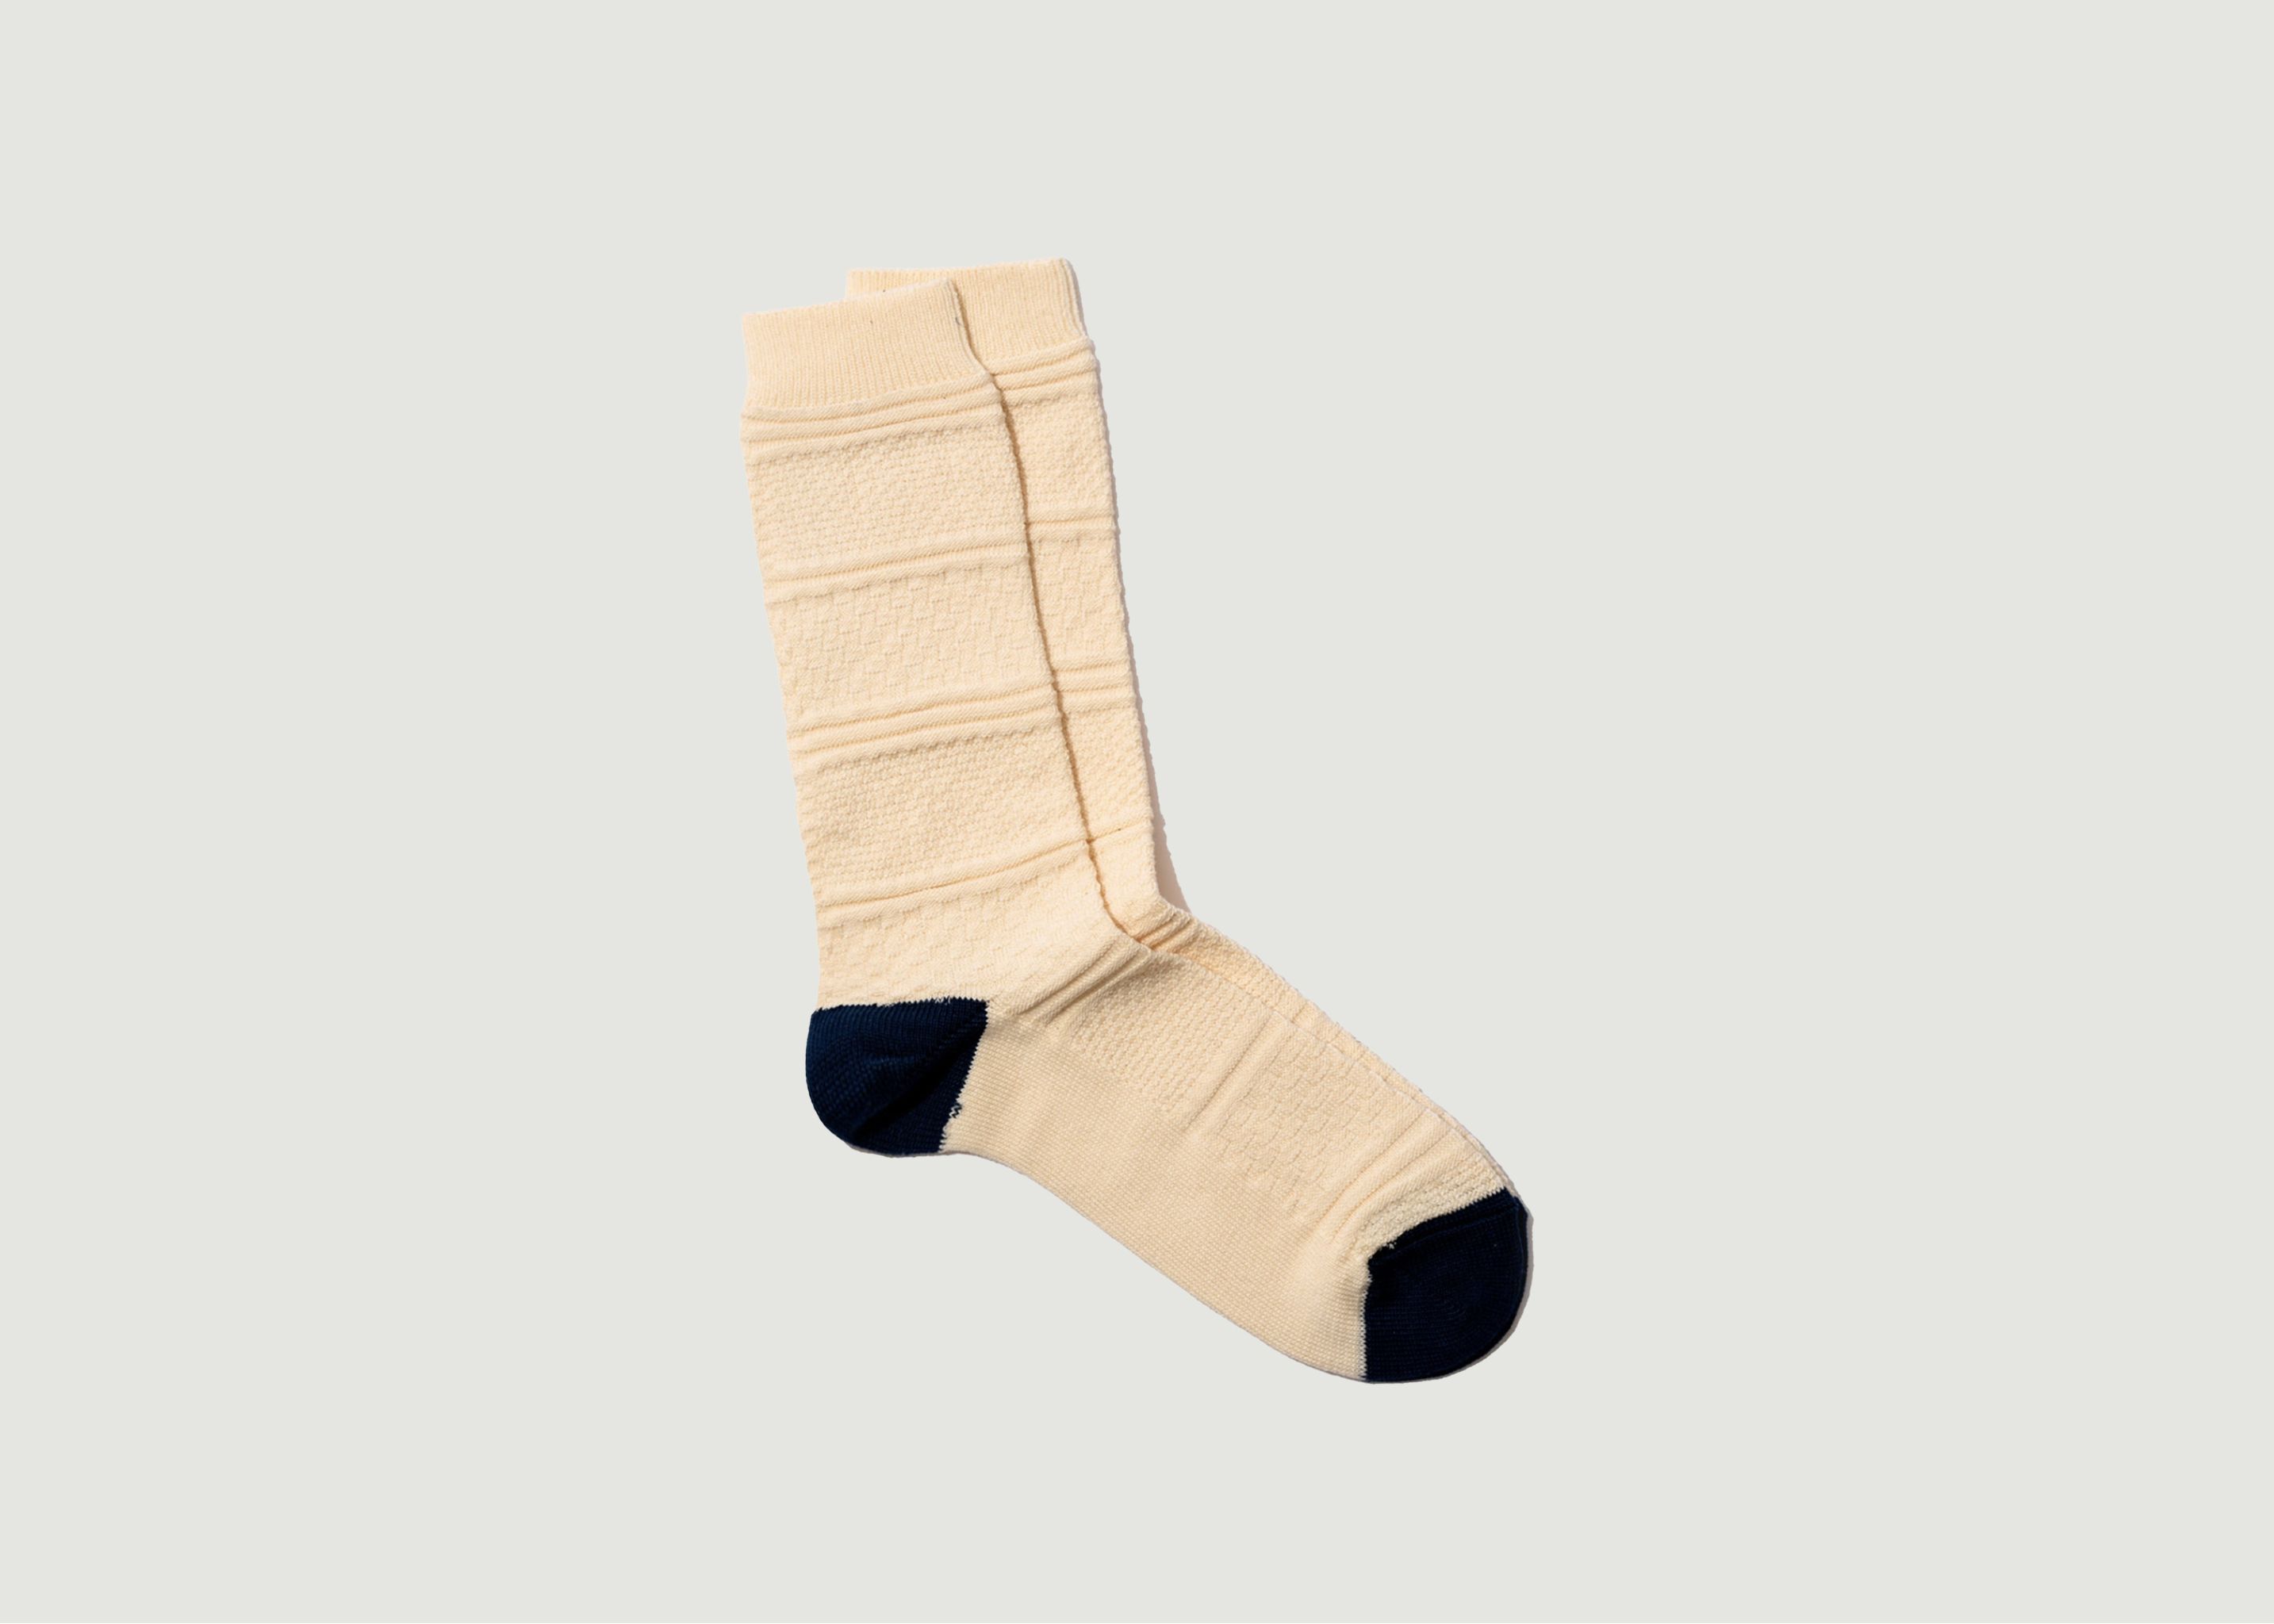 Melville two-tone socks - Royalties